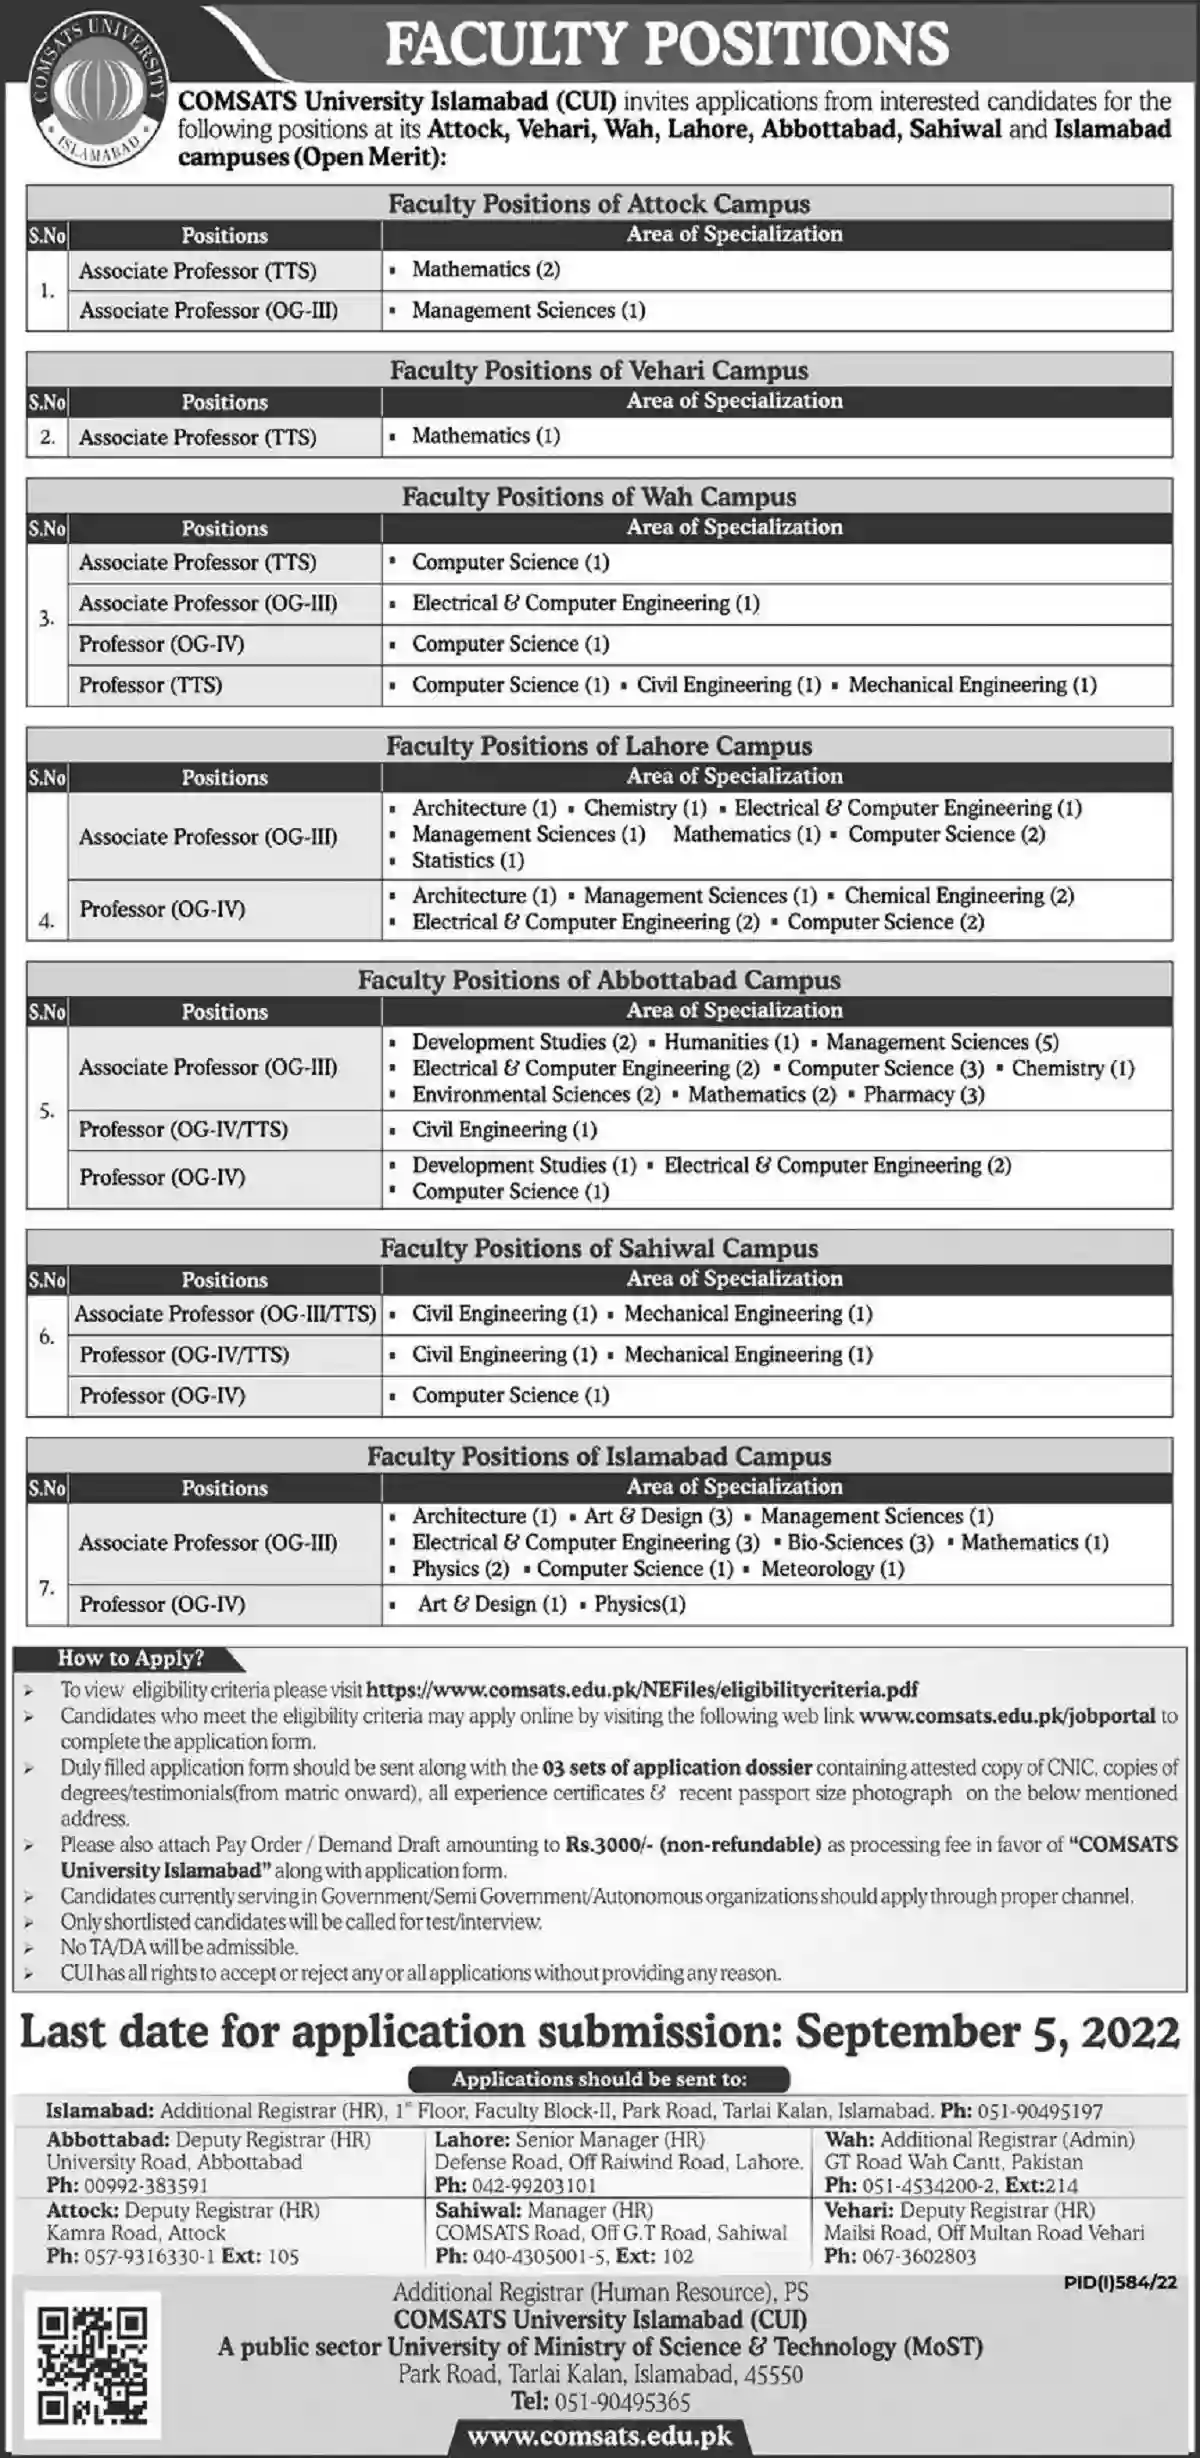 COMSATS University Faculty Jobs 2022 Islamabad Advertisement CUI Careers